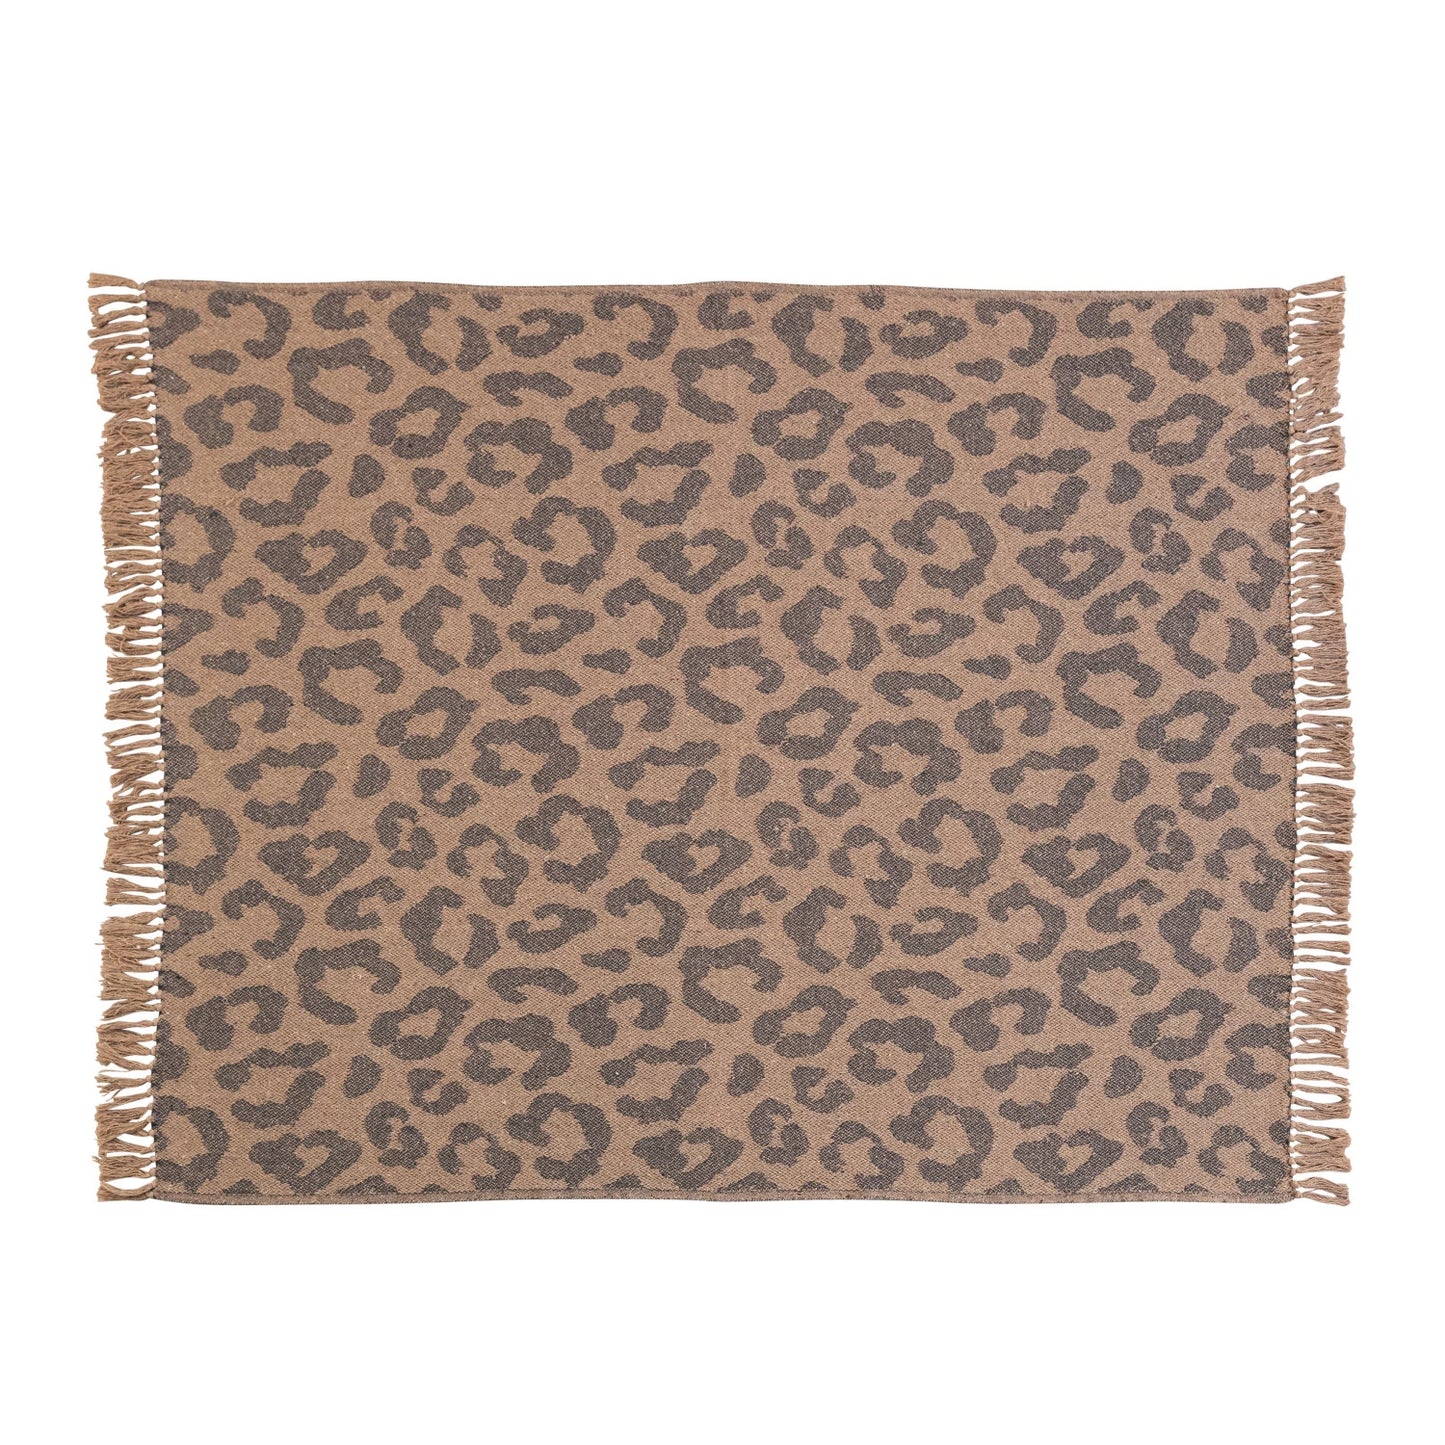 60"L x 50"W Woven Recycled Cotton Blend Leopard Print Throw w/ Fringe | Black & Tan